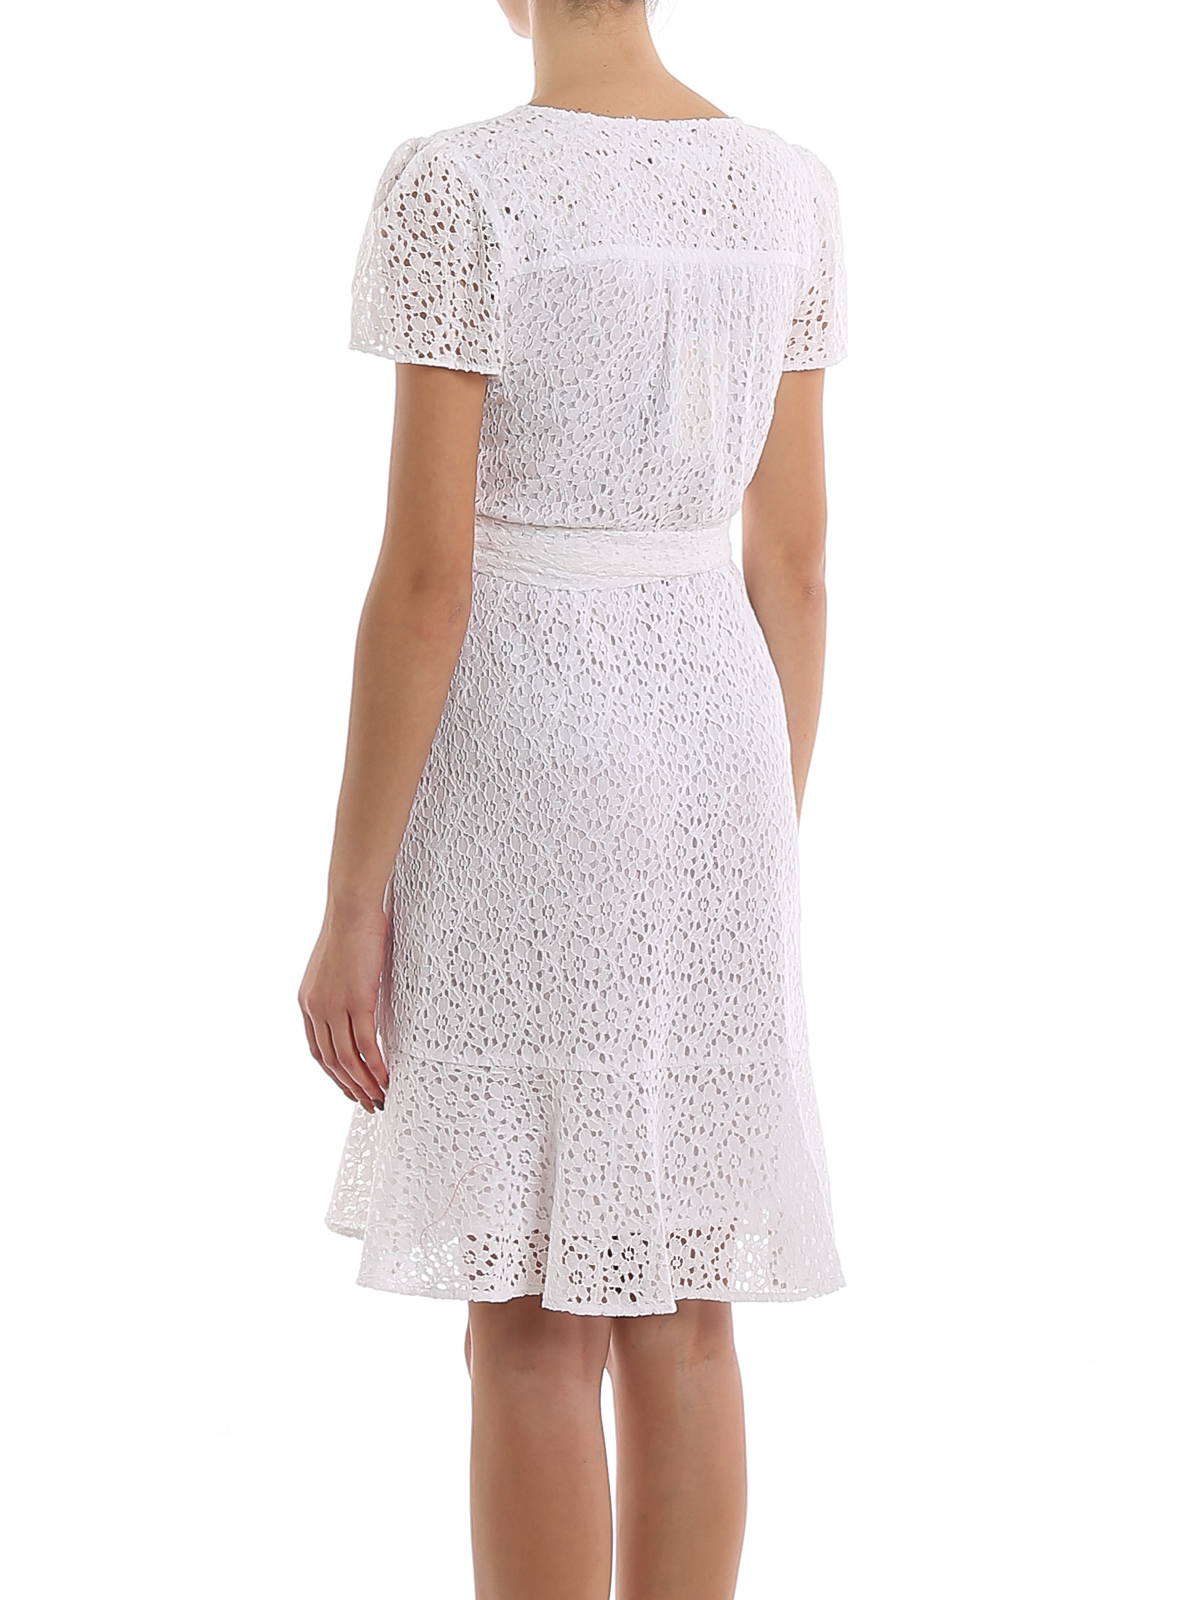 Michael Kors Womens FoulardPrint FauxWrap Mini Dress  Macys